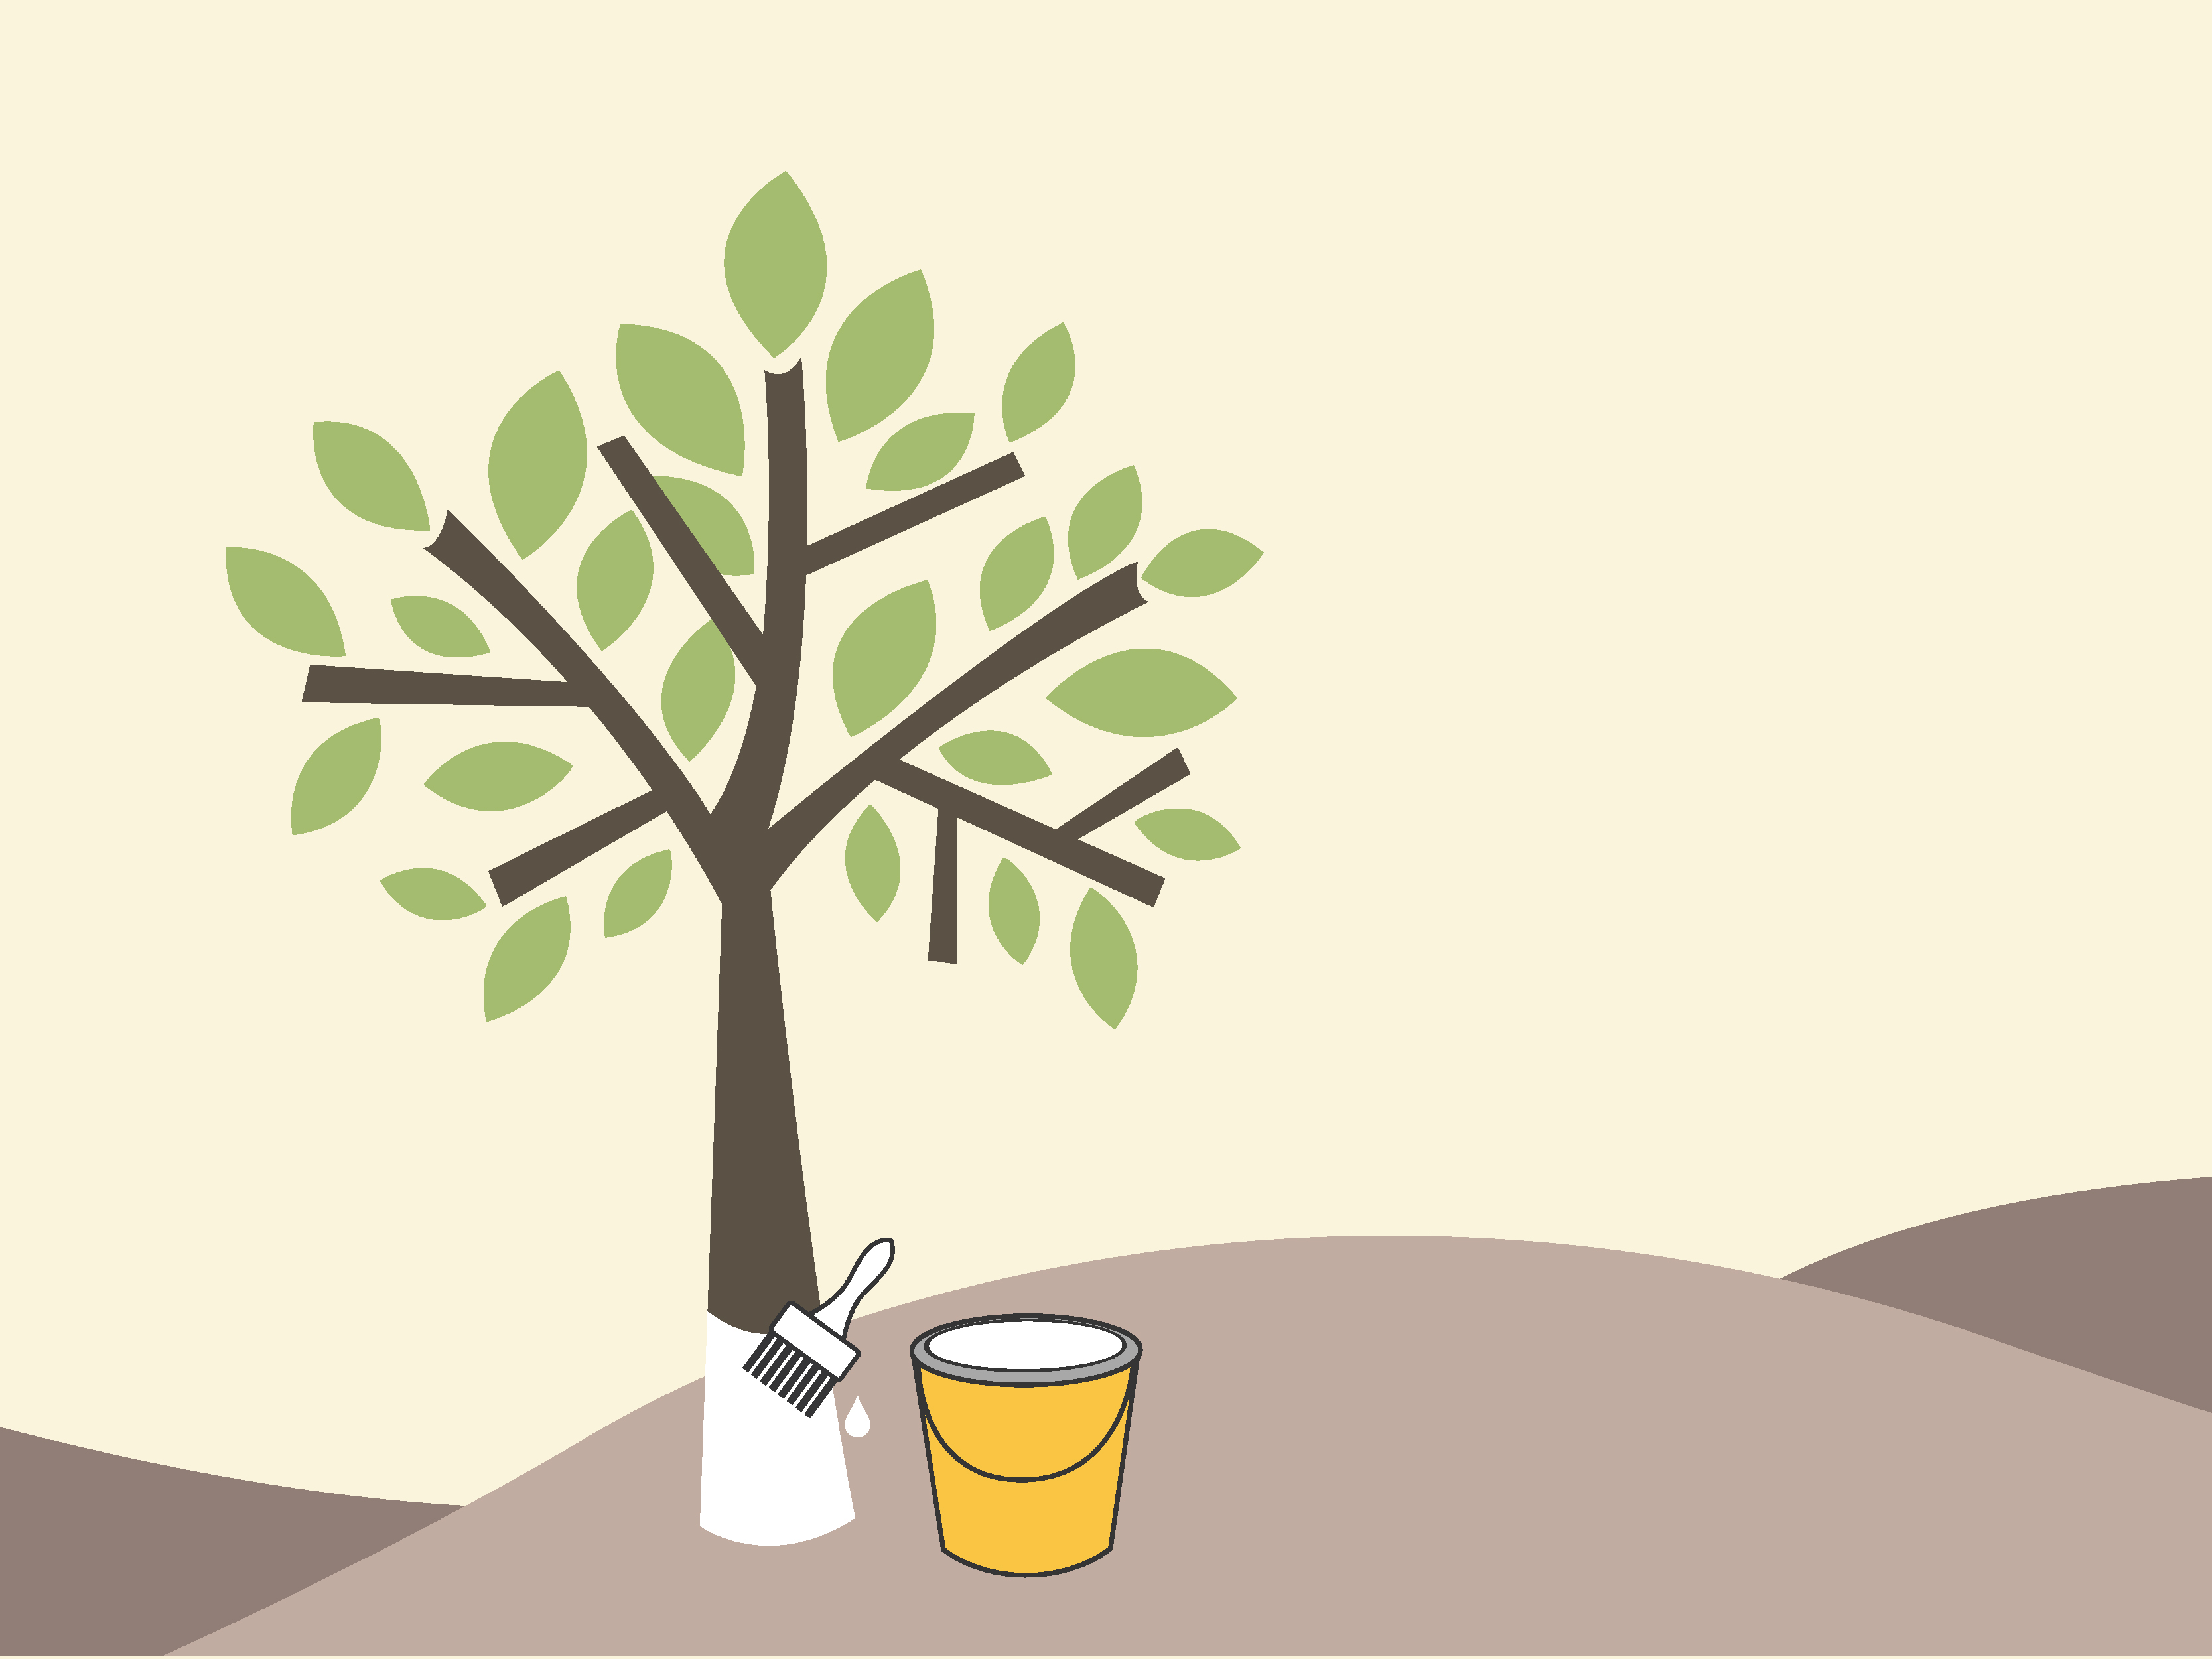 3 Ways to Prune Citrus Trees - wikiHow